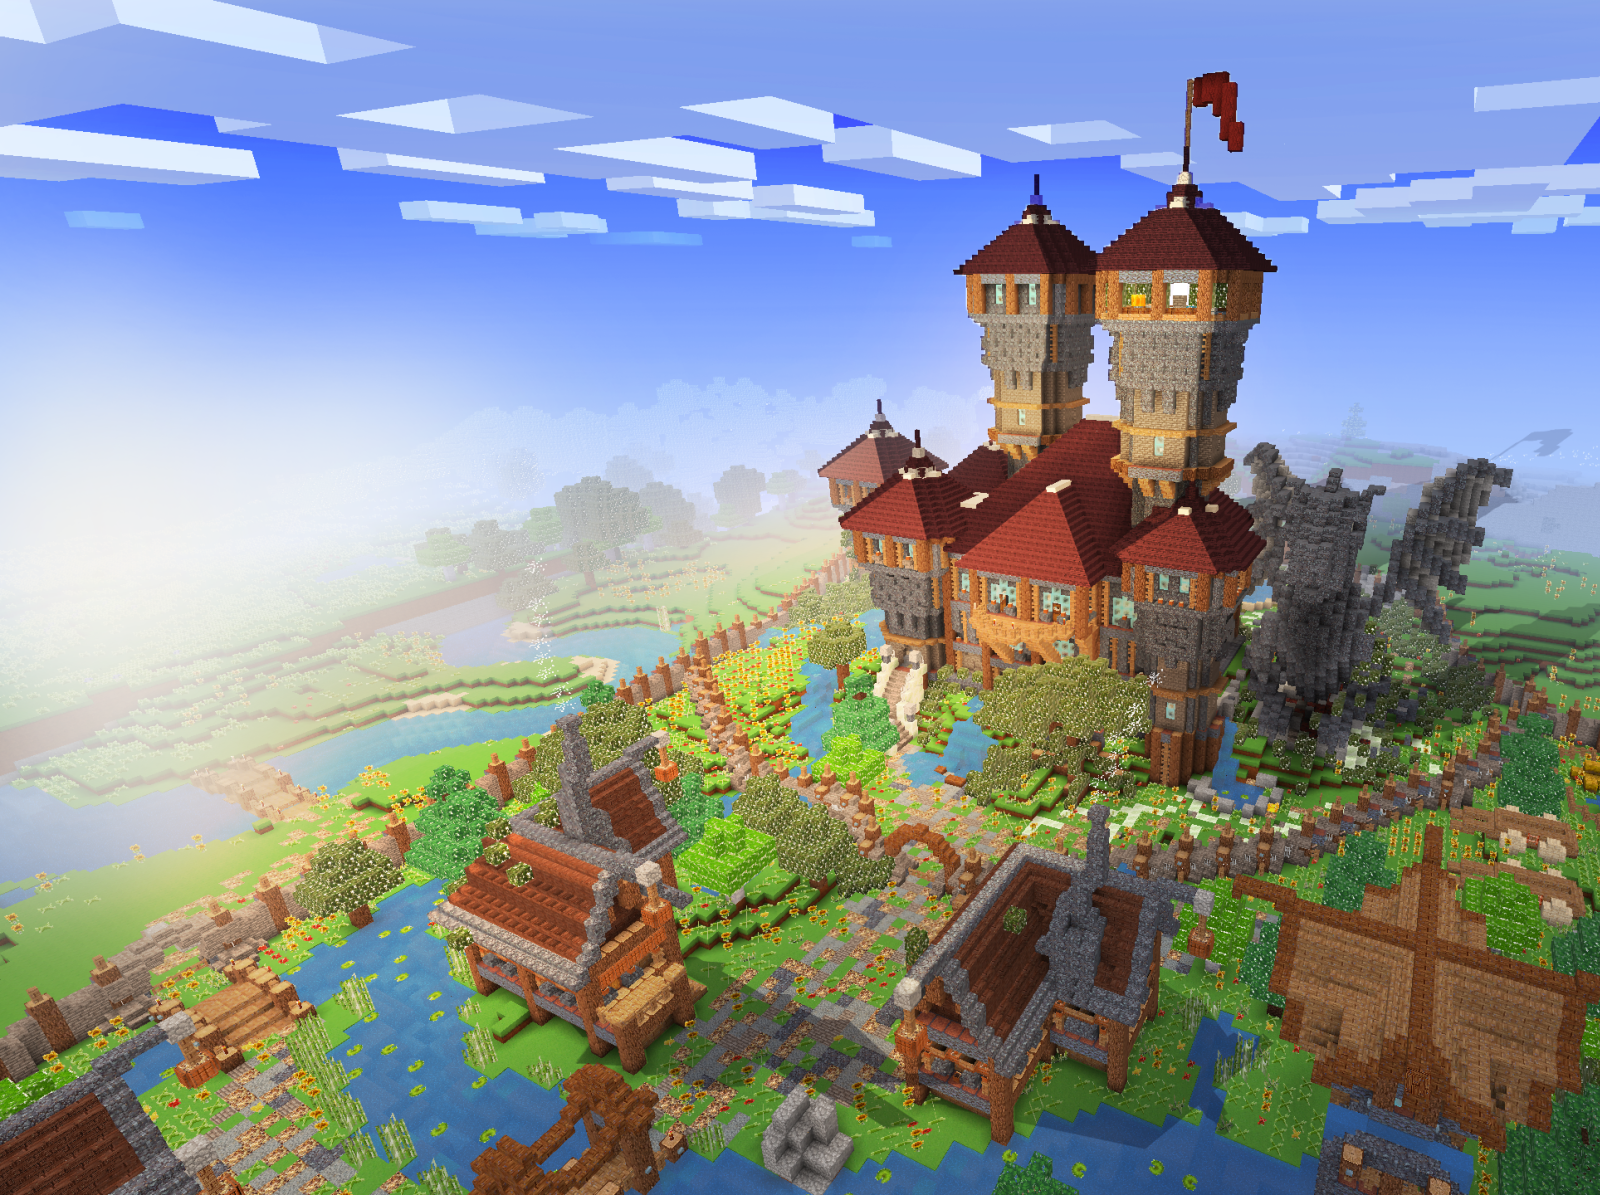 Minecraft Medieval Fantasy Castle 🏰 in REALMCRAFT Free Minecraf.